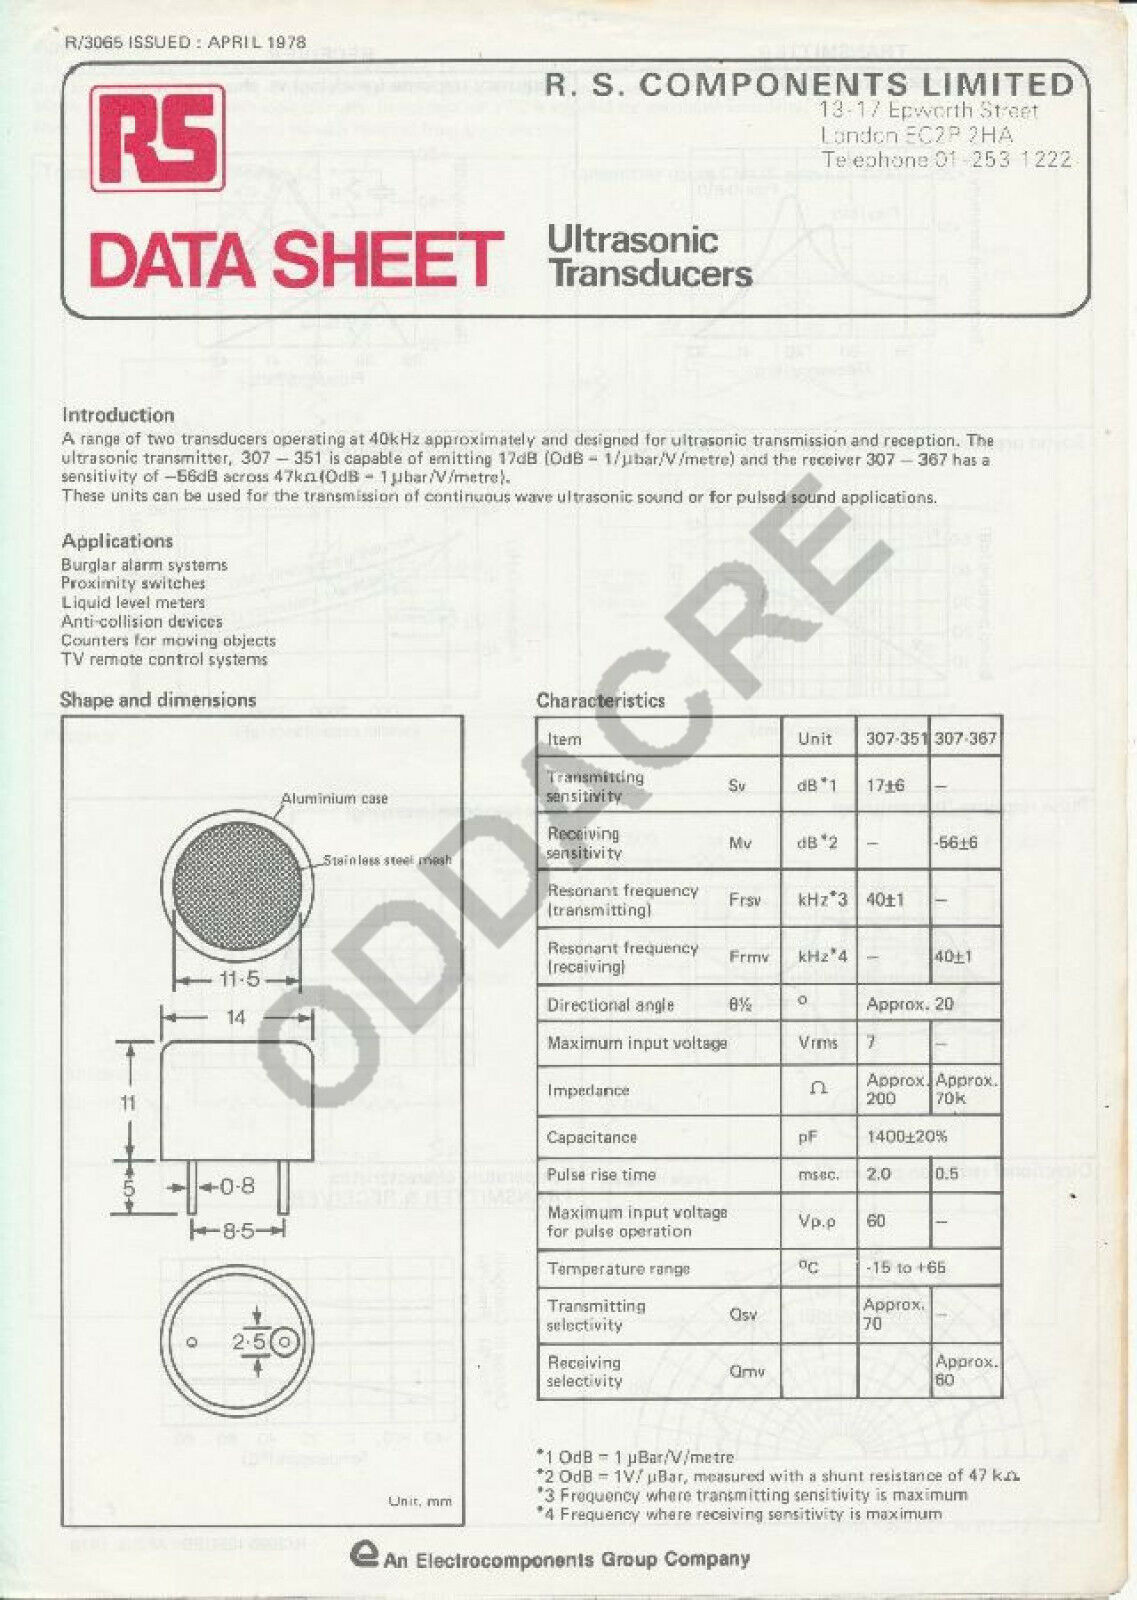 ULTRASONIC TRANSDUCERS RADIOSPARES 1978 DATA SHEET 307-351 307-367